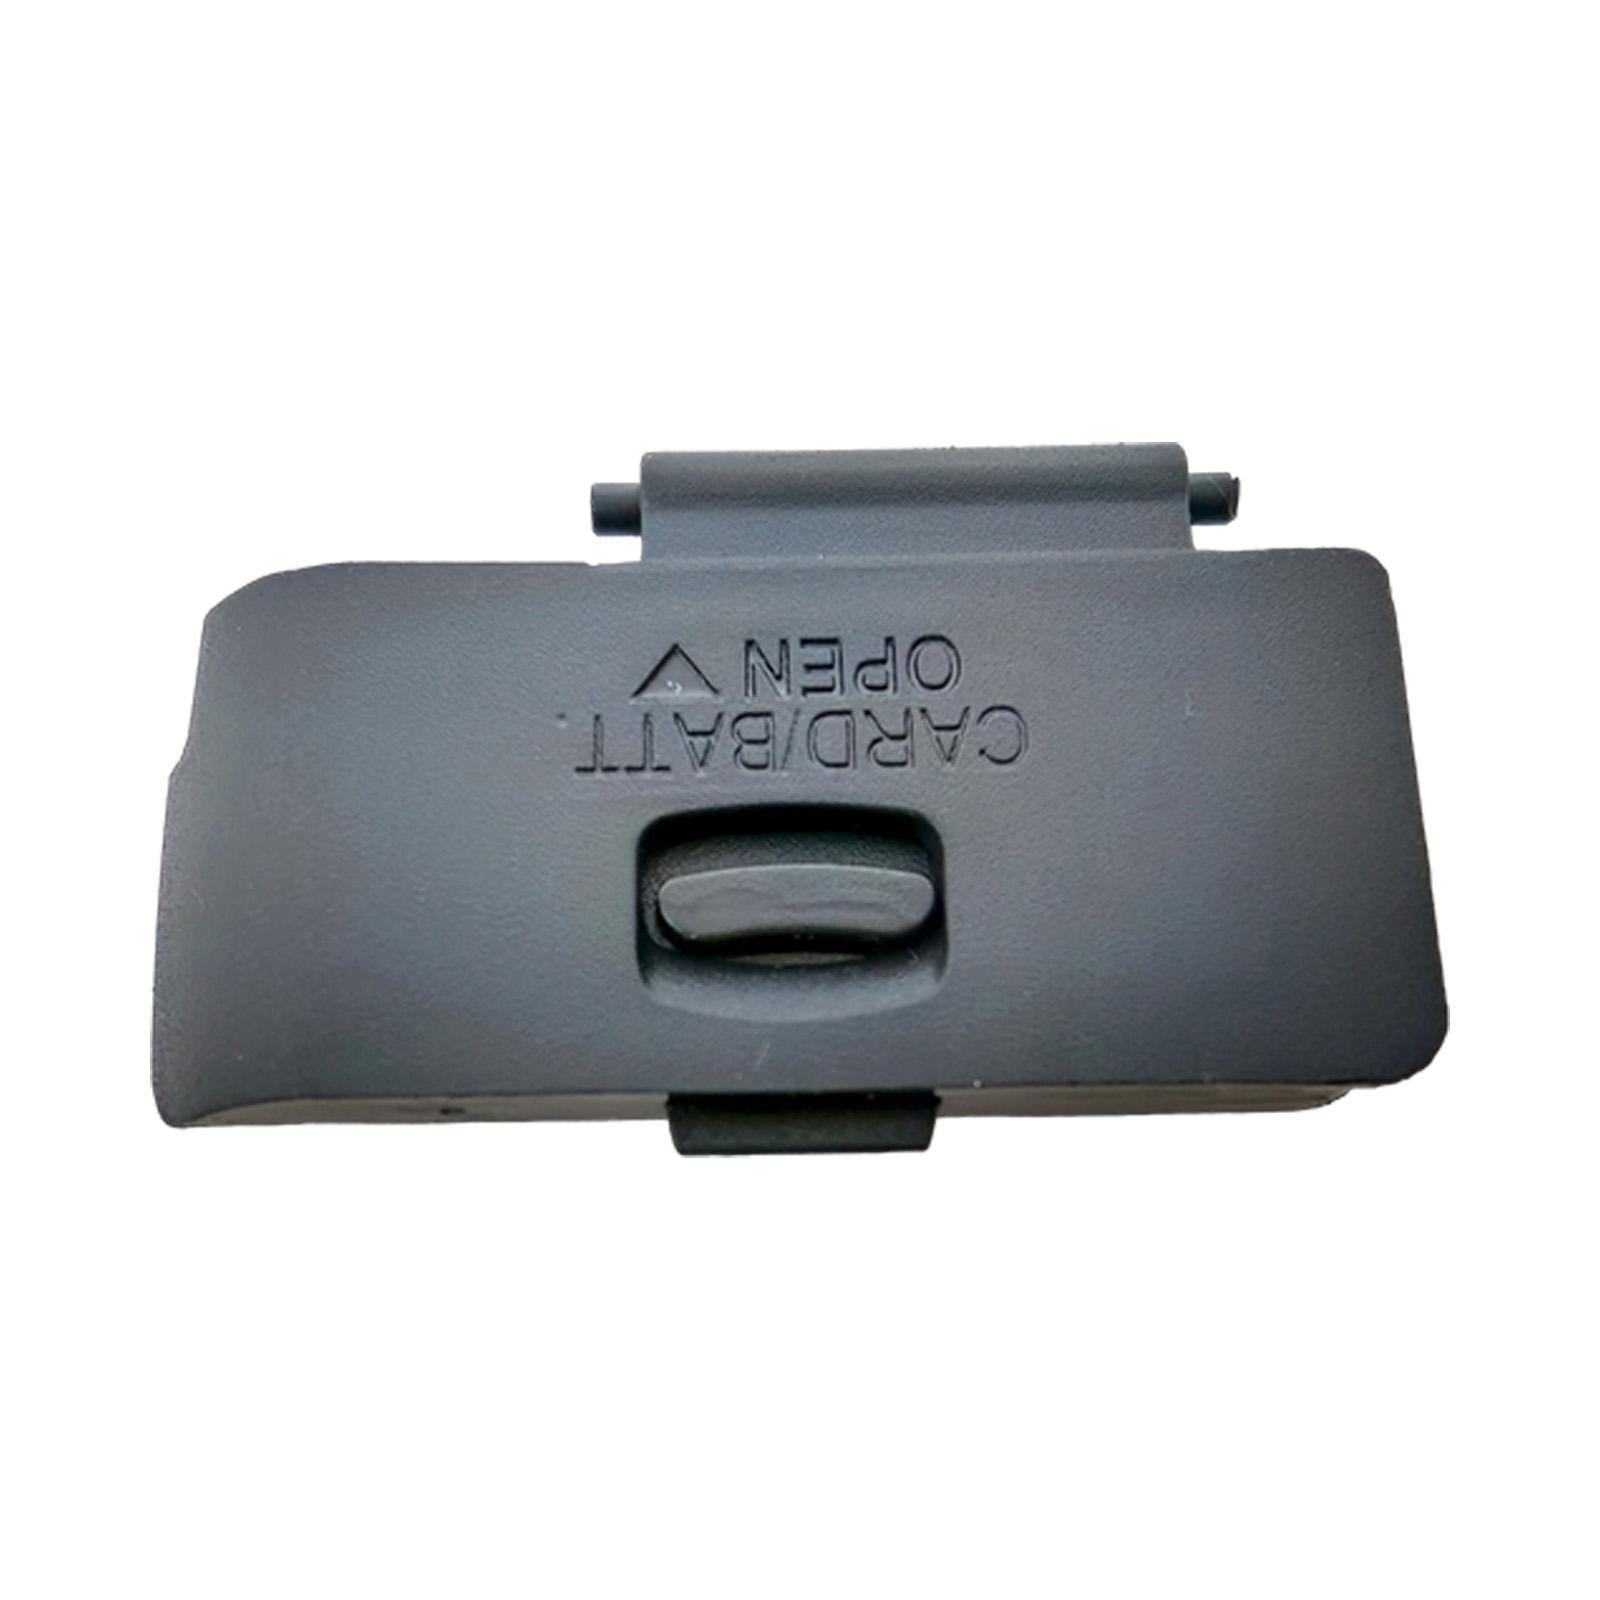 Battery Door Cover Wear Resistant Batteries Lid Cap for 1300D Unit